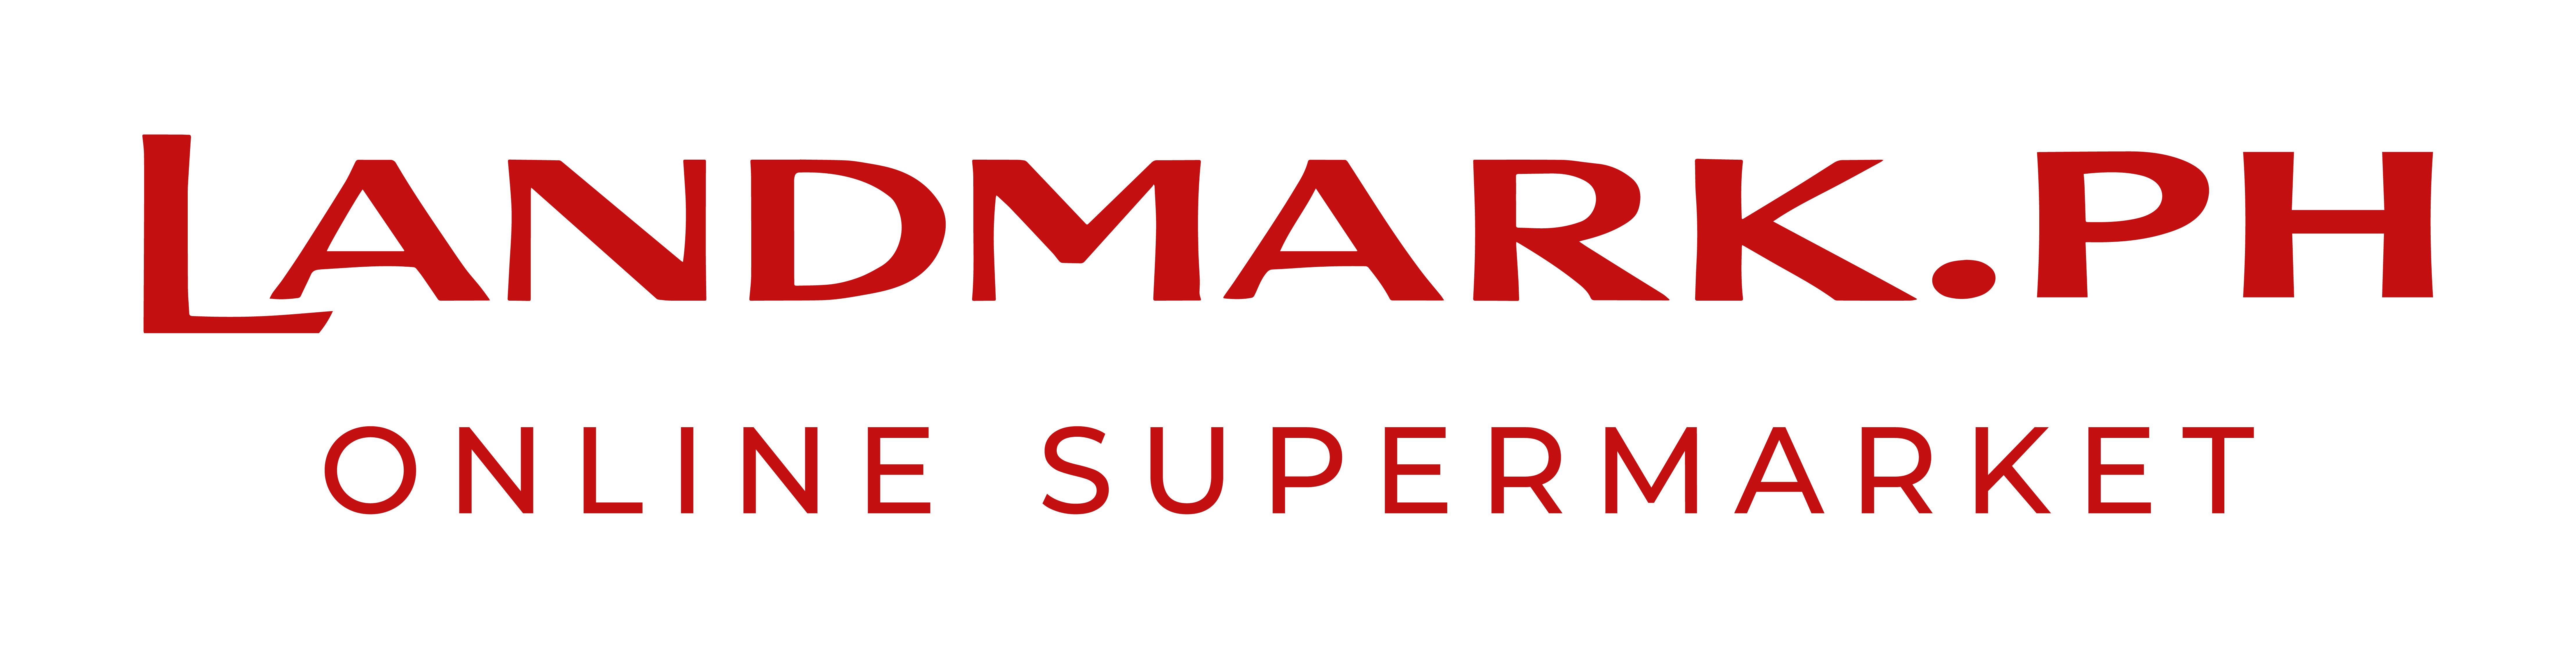 LMPH-Online Supermarket Logo-04